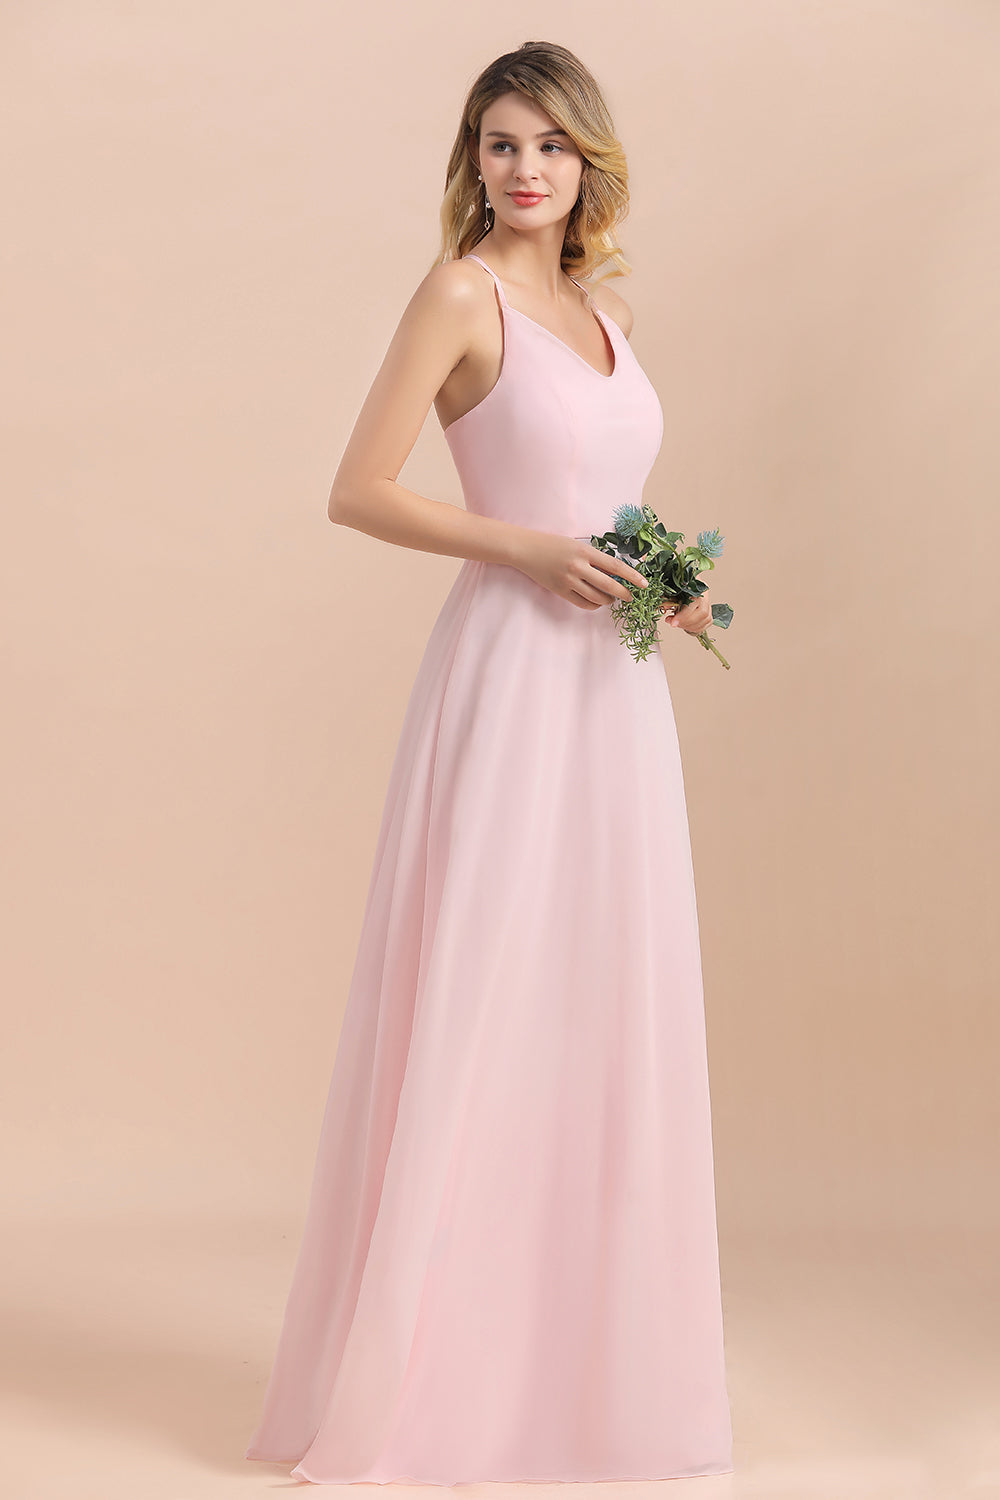 Chic Spaghetti Straps Chiffon Pink Bridesmaid Dresses with Crisscross Back-27dress